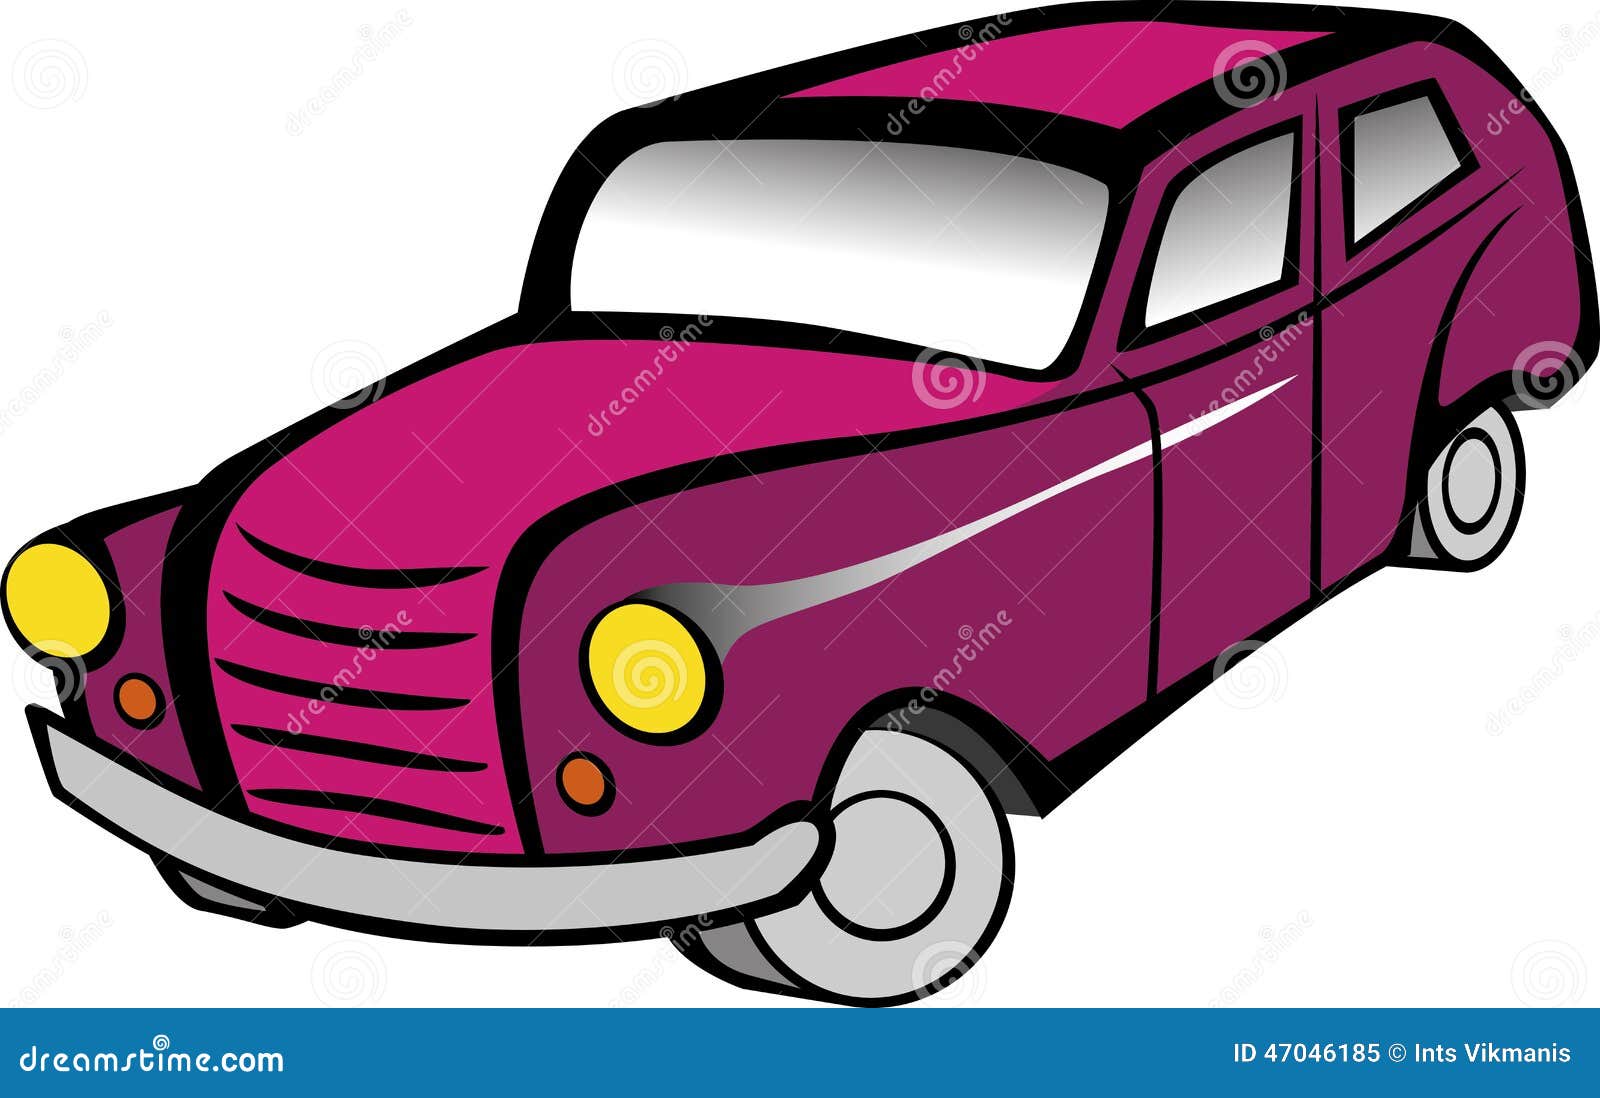 Funny old car cartoon stock vector. Illustration of black - 47046185